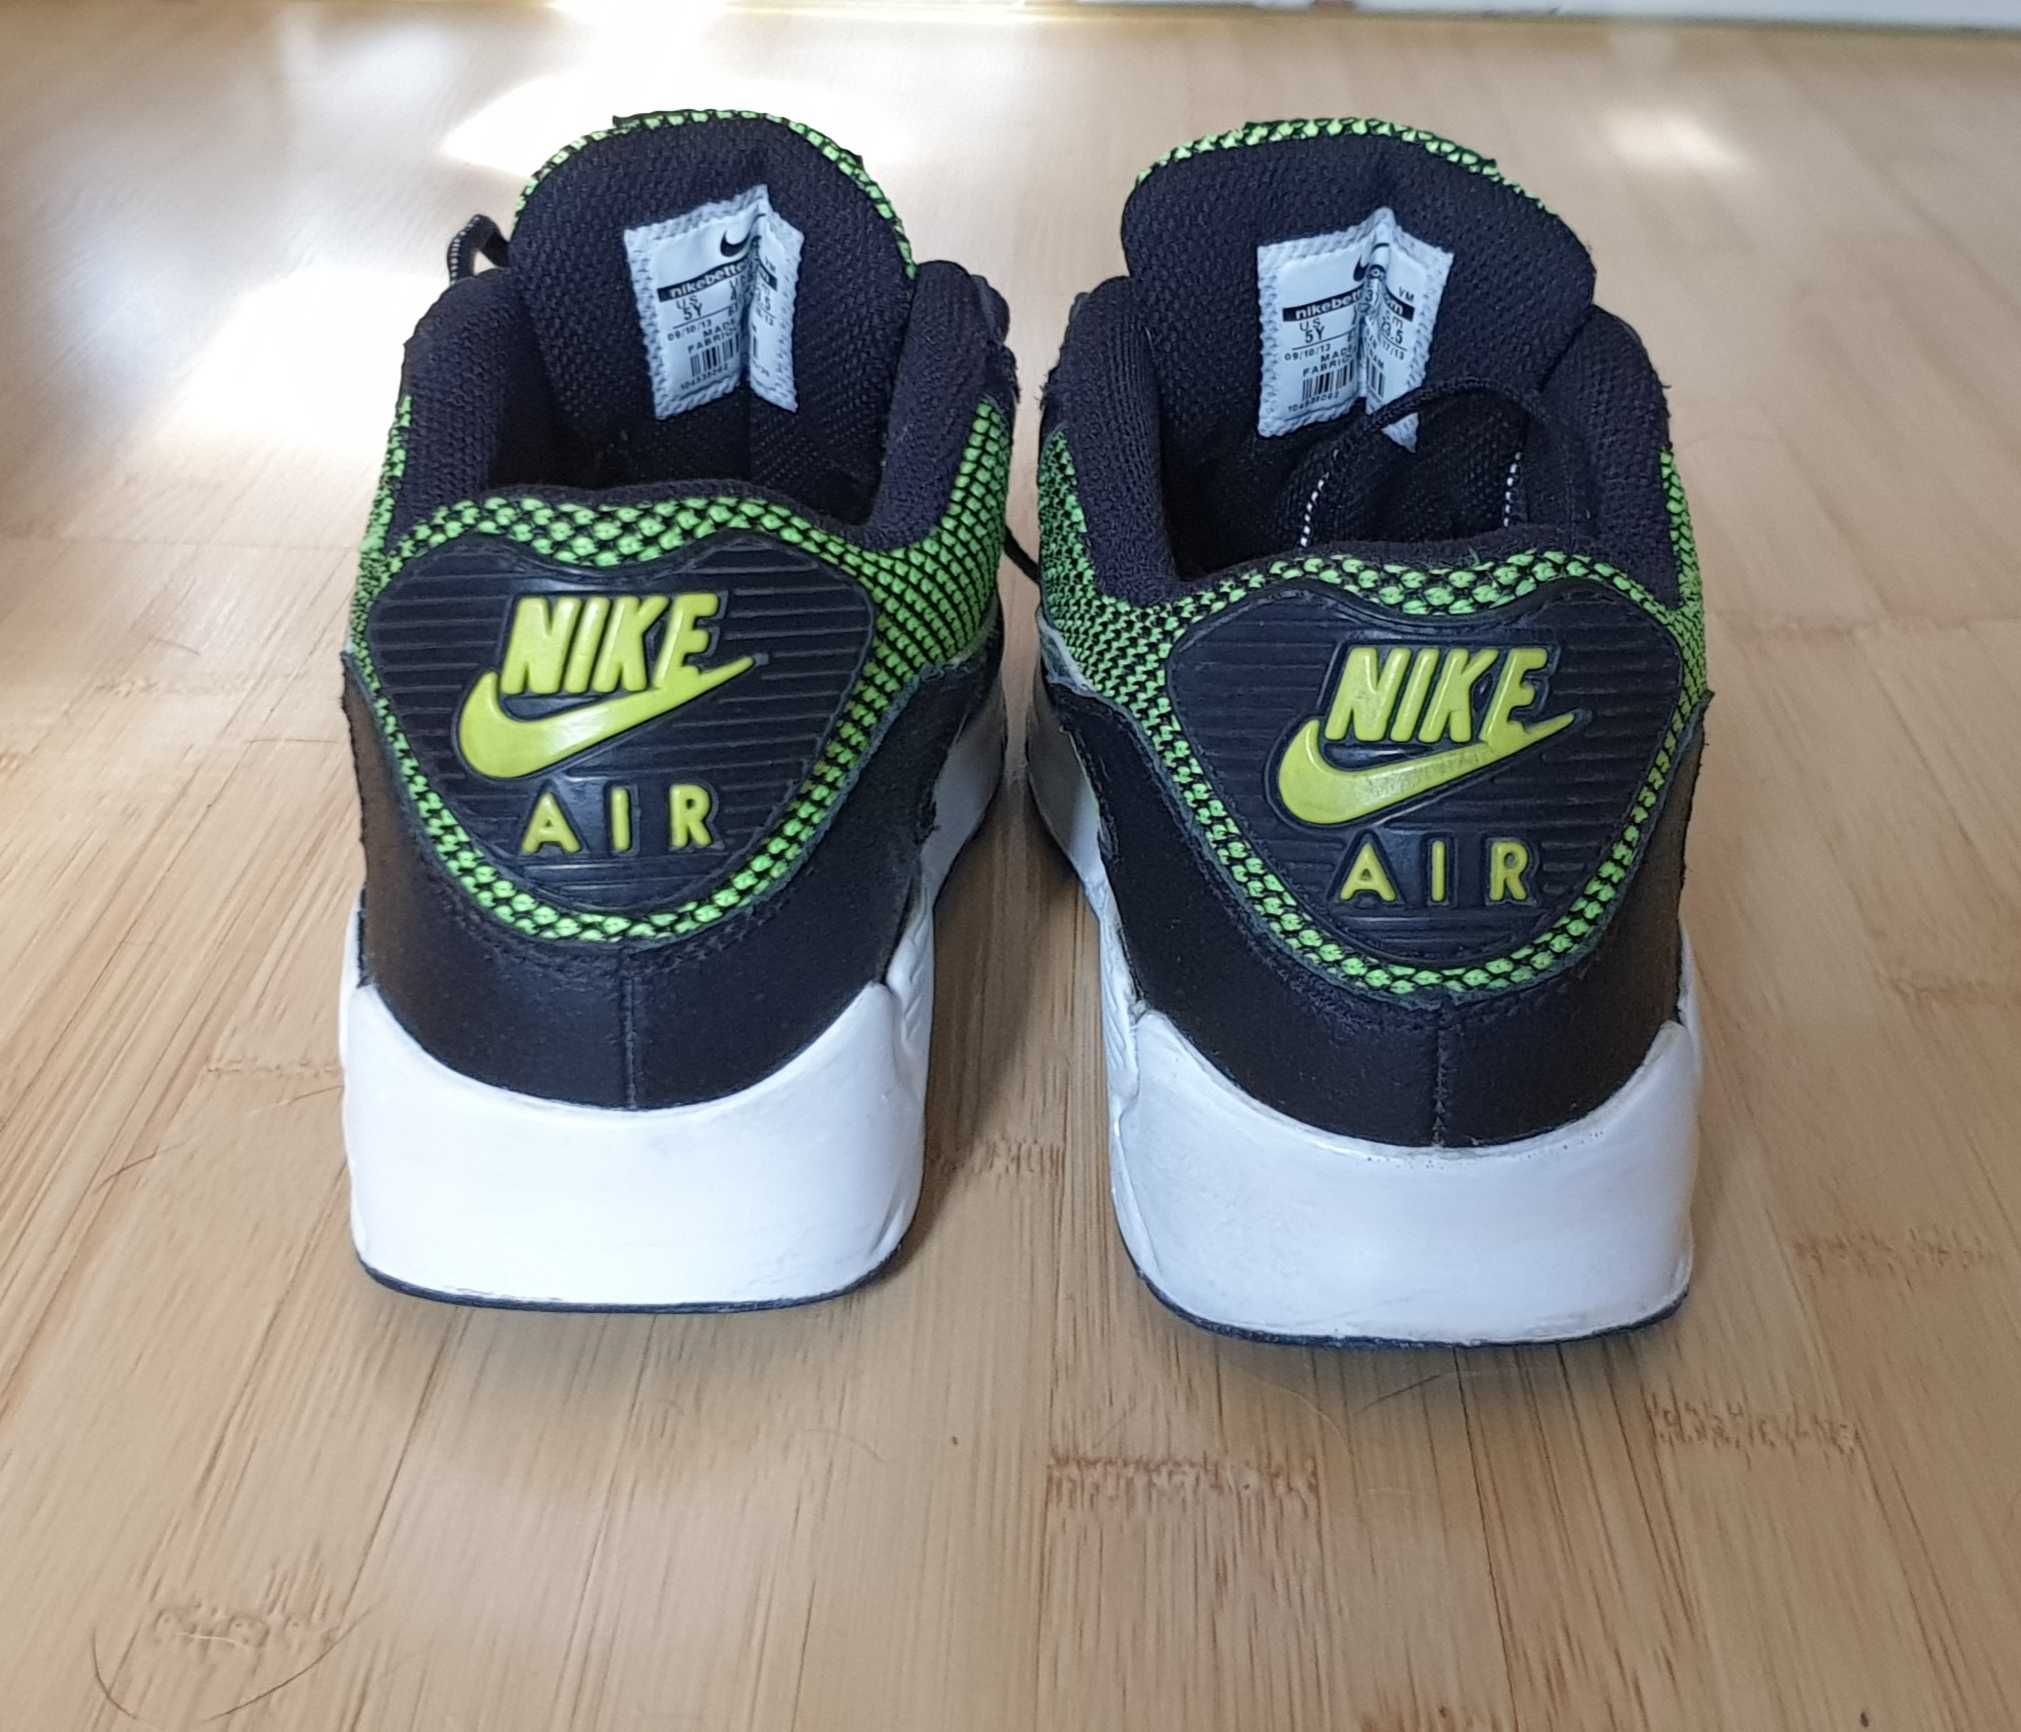 Oryginalne damskie buty Nike Air Max 90 rozm.37,5